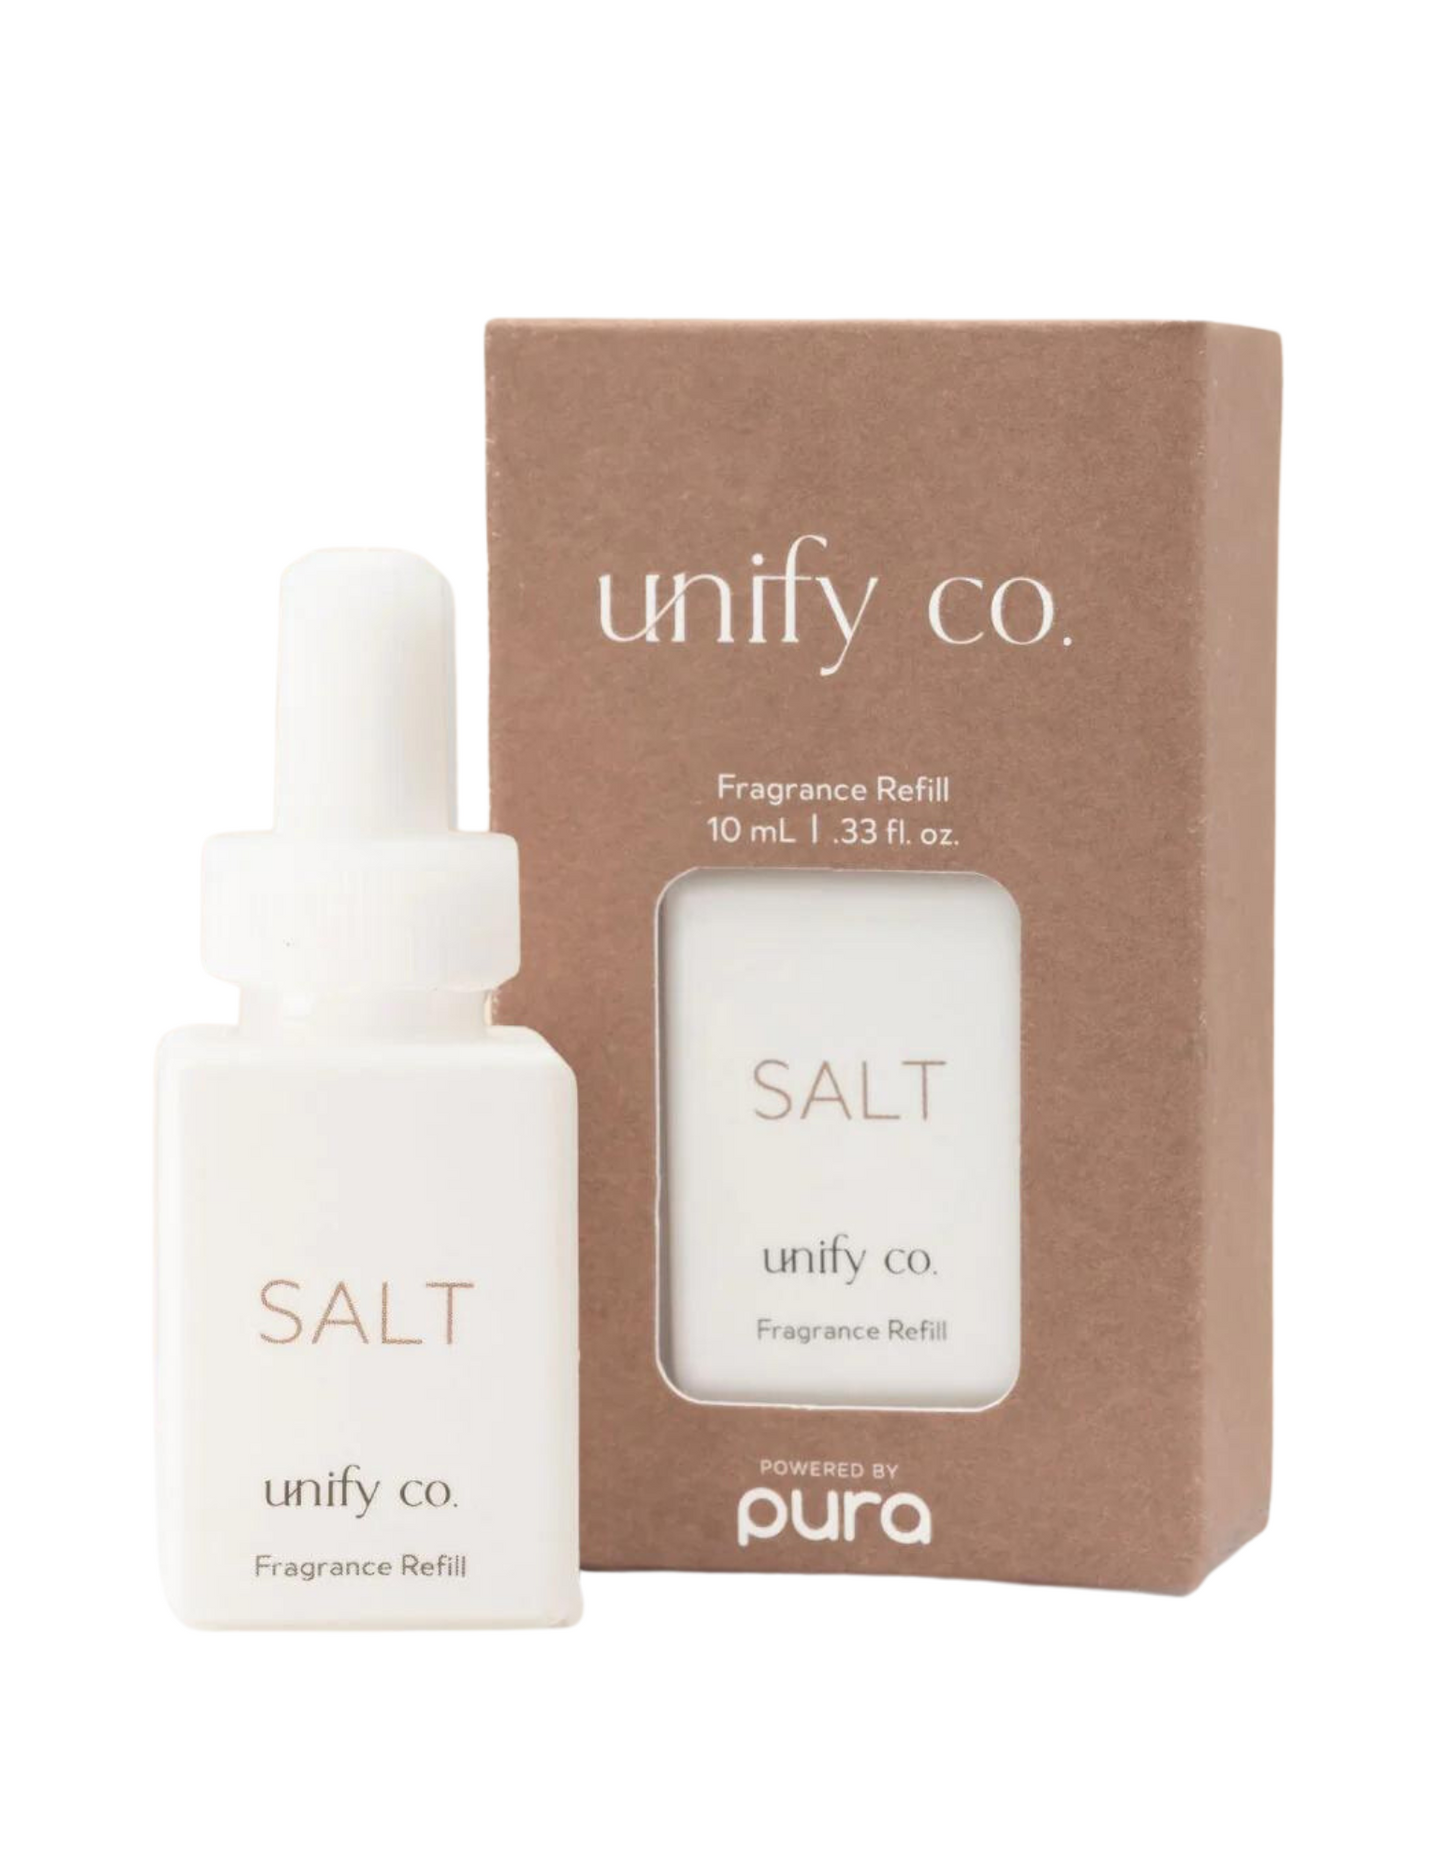 Unify Co. Fragrance Refills